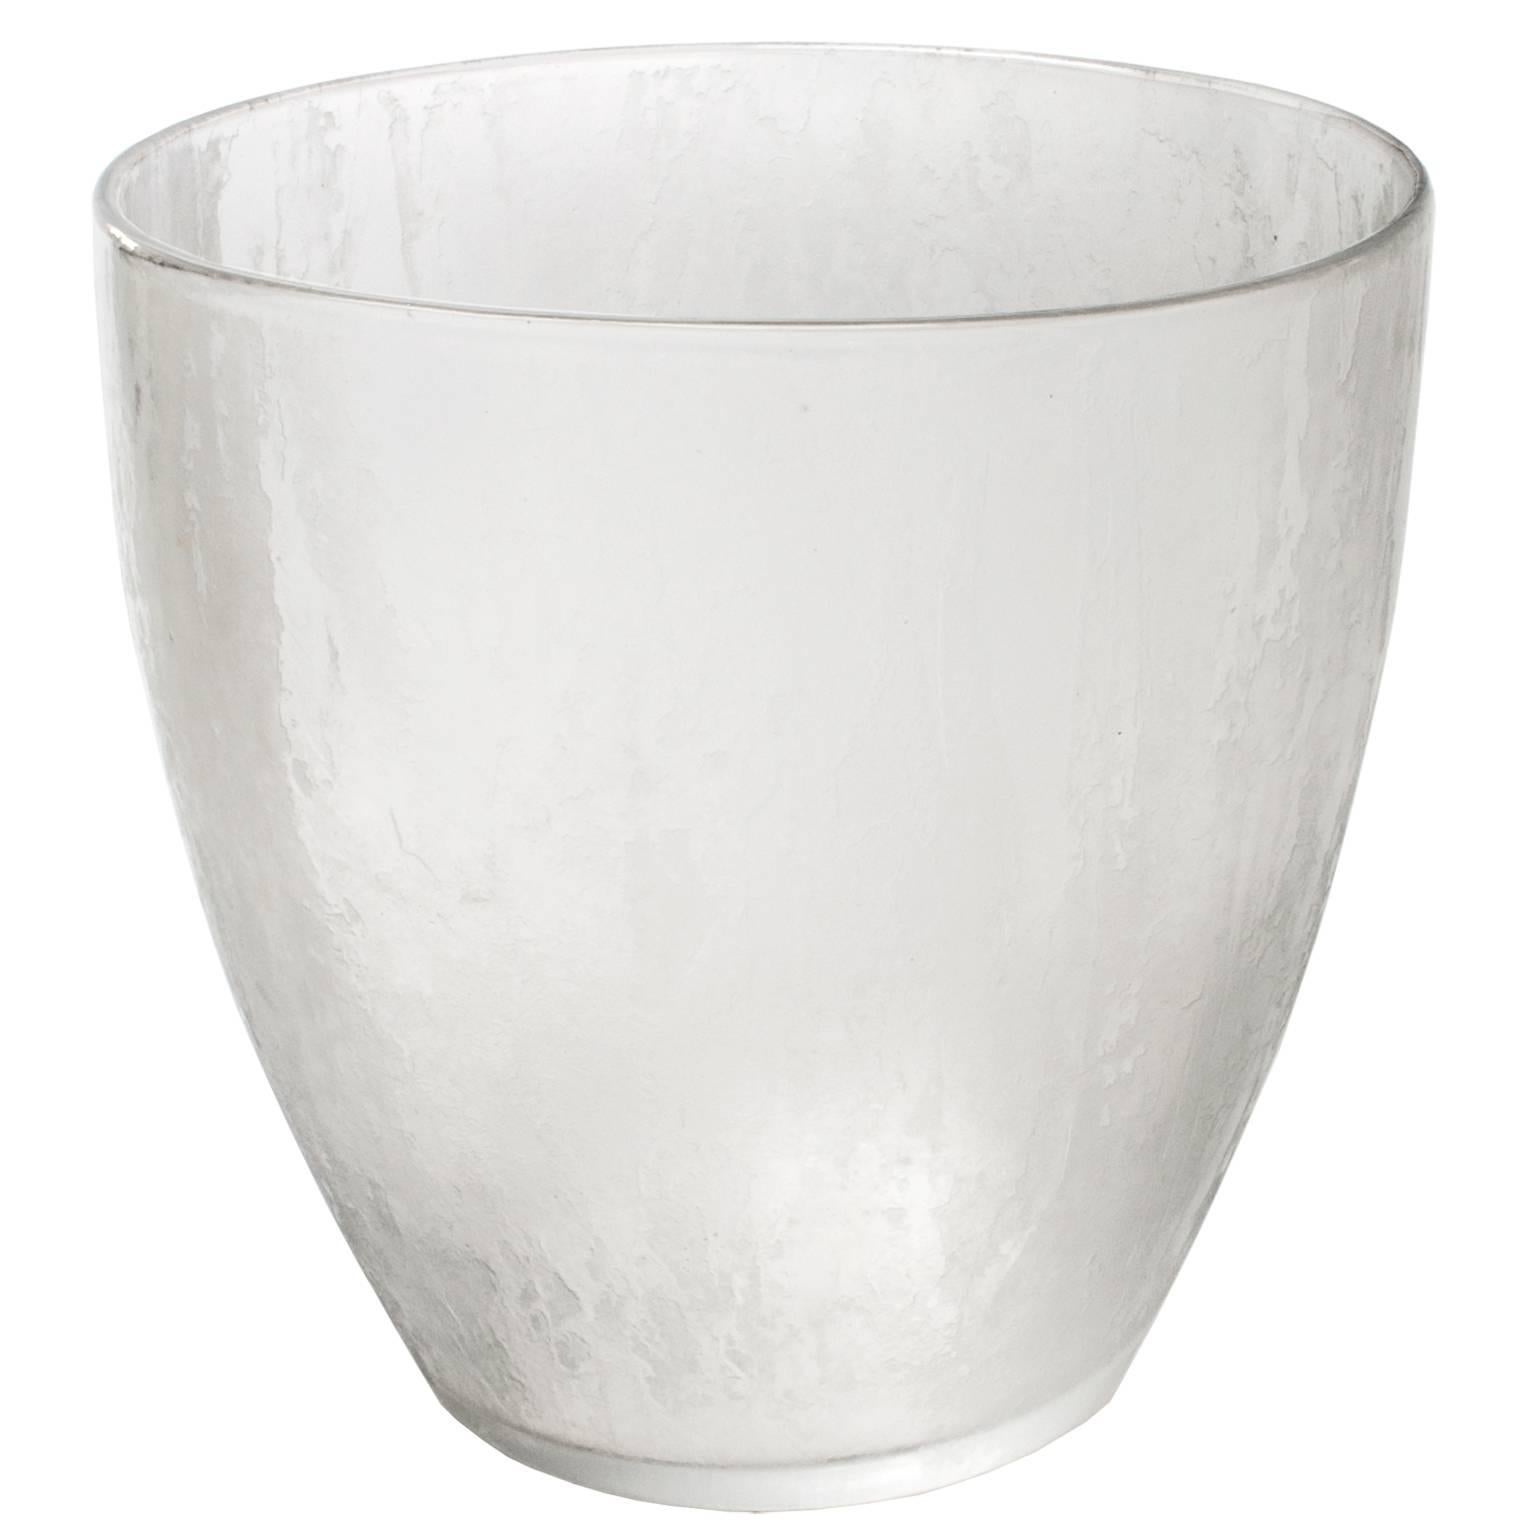 Scandinavian Modern "Iced" Series Vase by Vicke Lindstrand for Orrefors